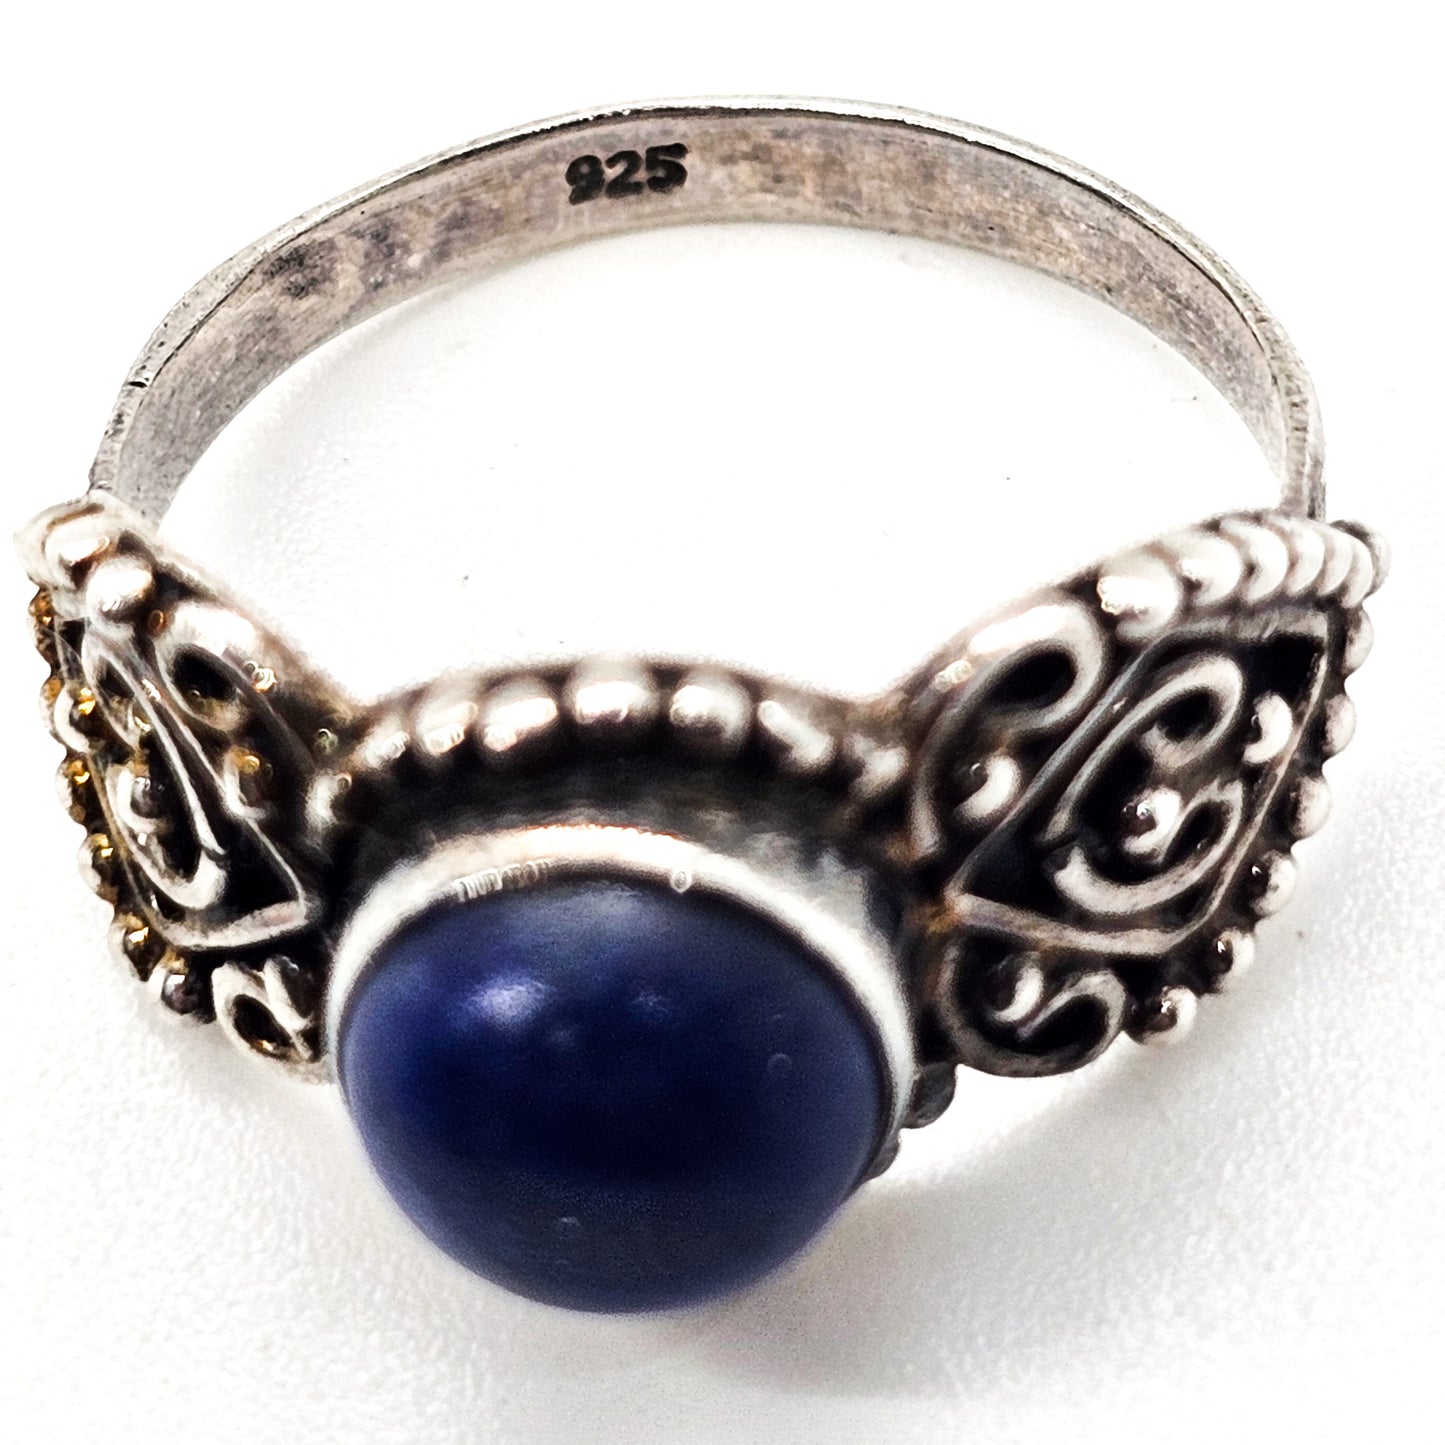 Lapis Lazuli tribal Bali Balinese scroll heart vintage sterling silver ring size 8.5